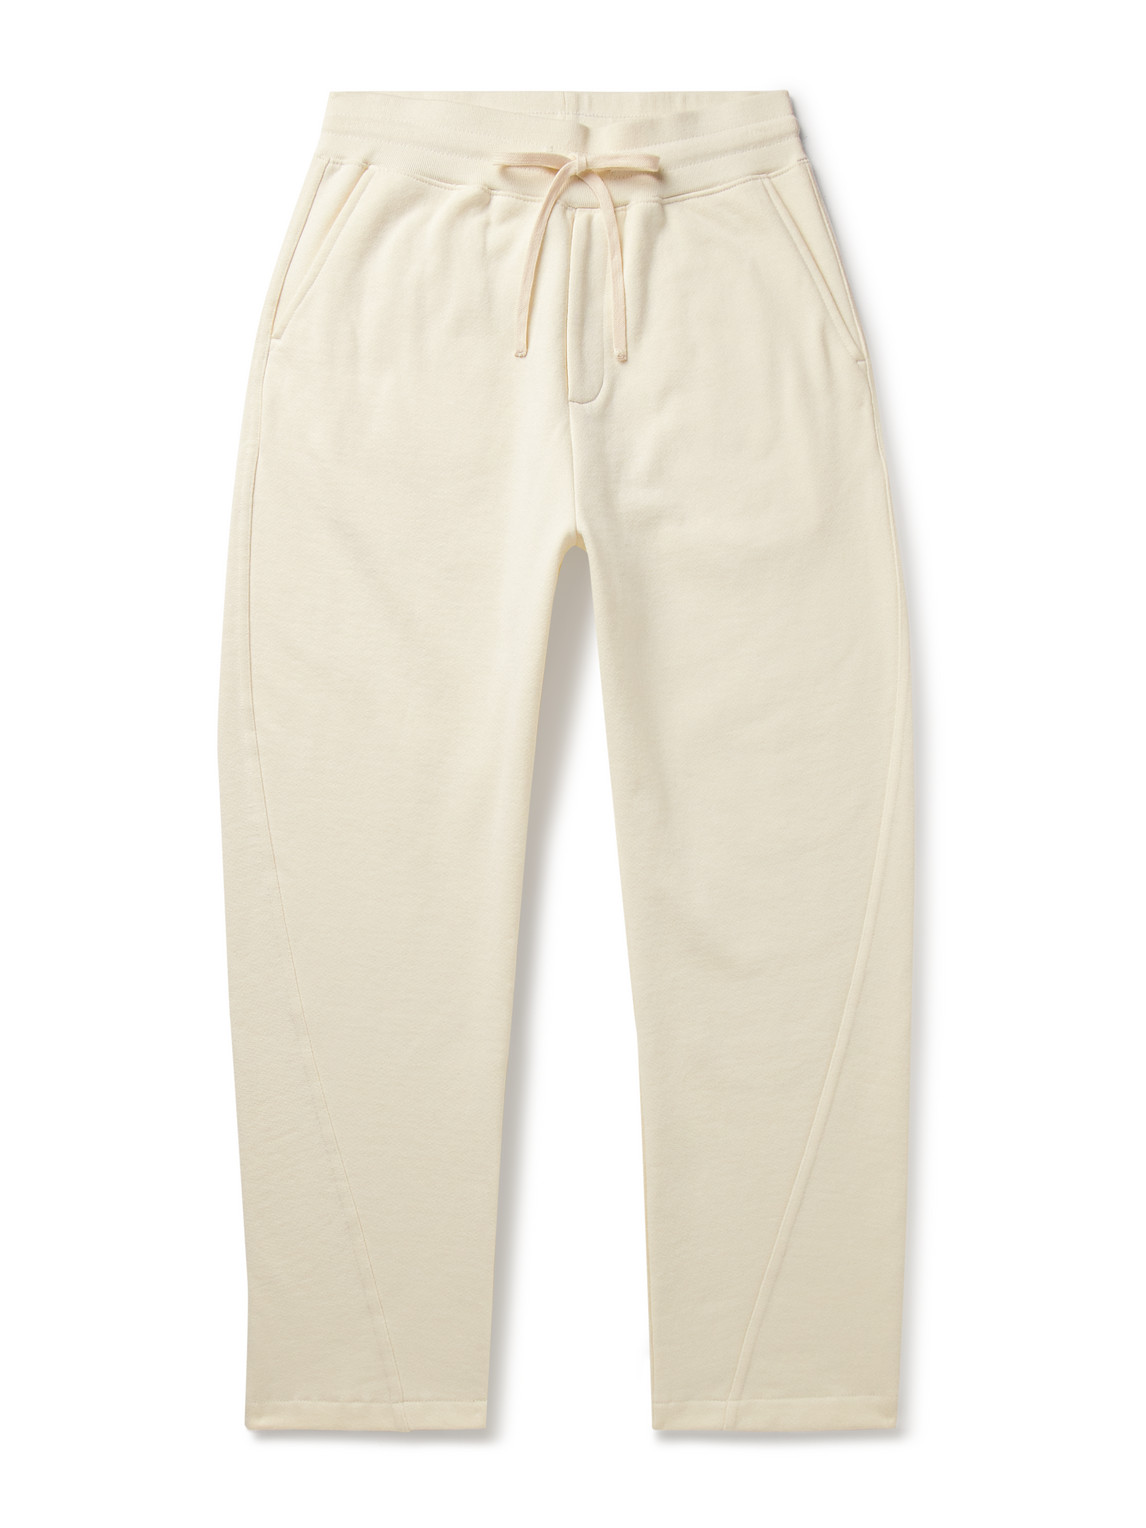 John Elliott - Studio Fleece Sendai Slim-Fit Cotton-Jersey Sweatpants - Men - Neutrals - XXL von John Elliott